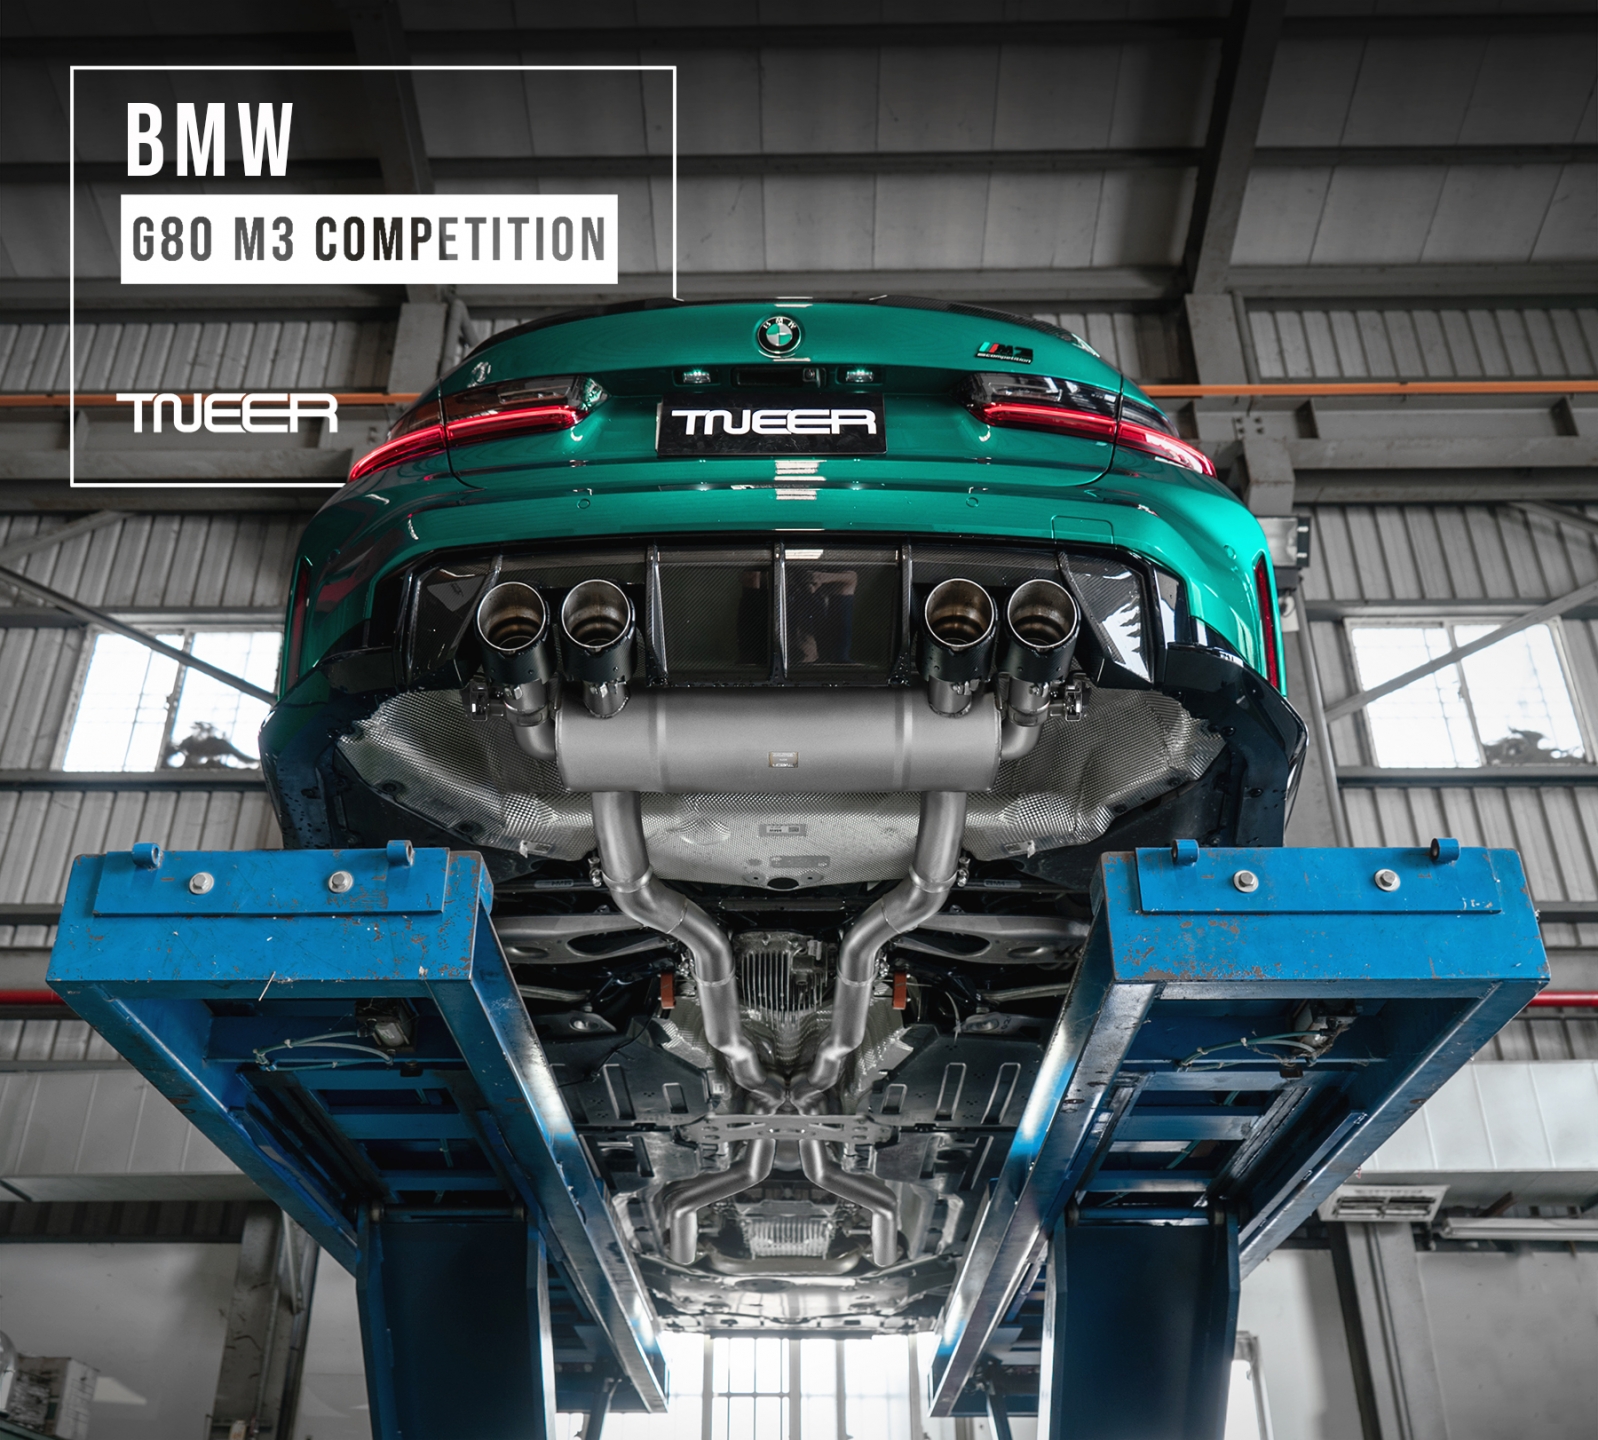 BMW G80 M3 M Performance TNEER Exhaust System